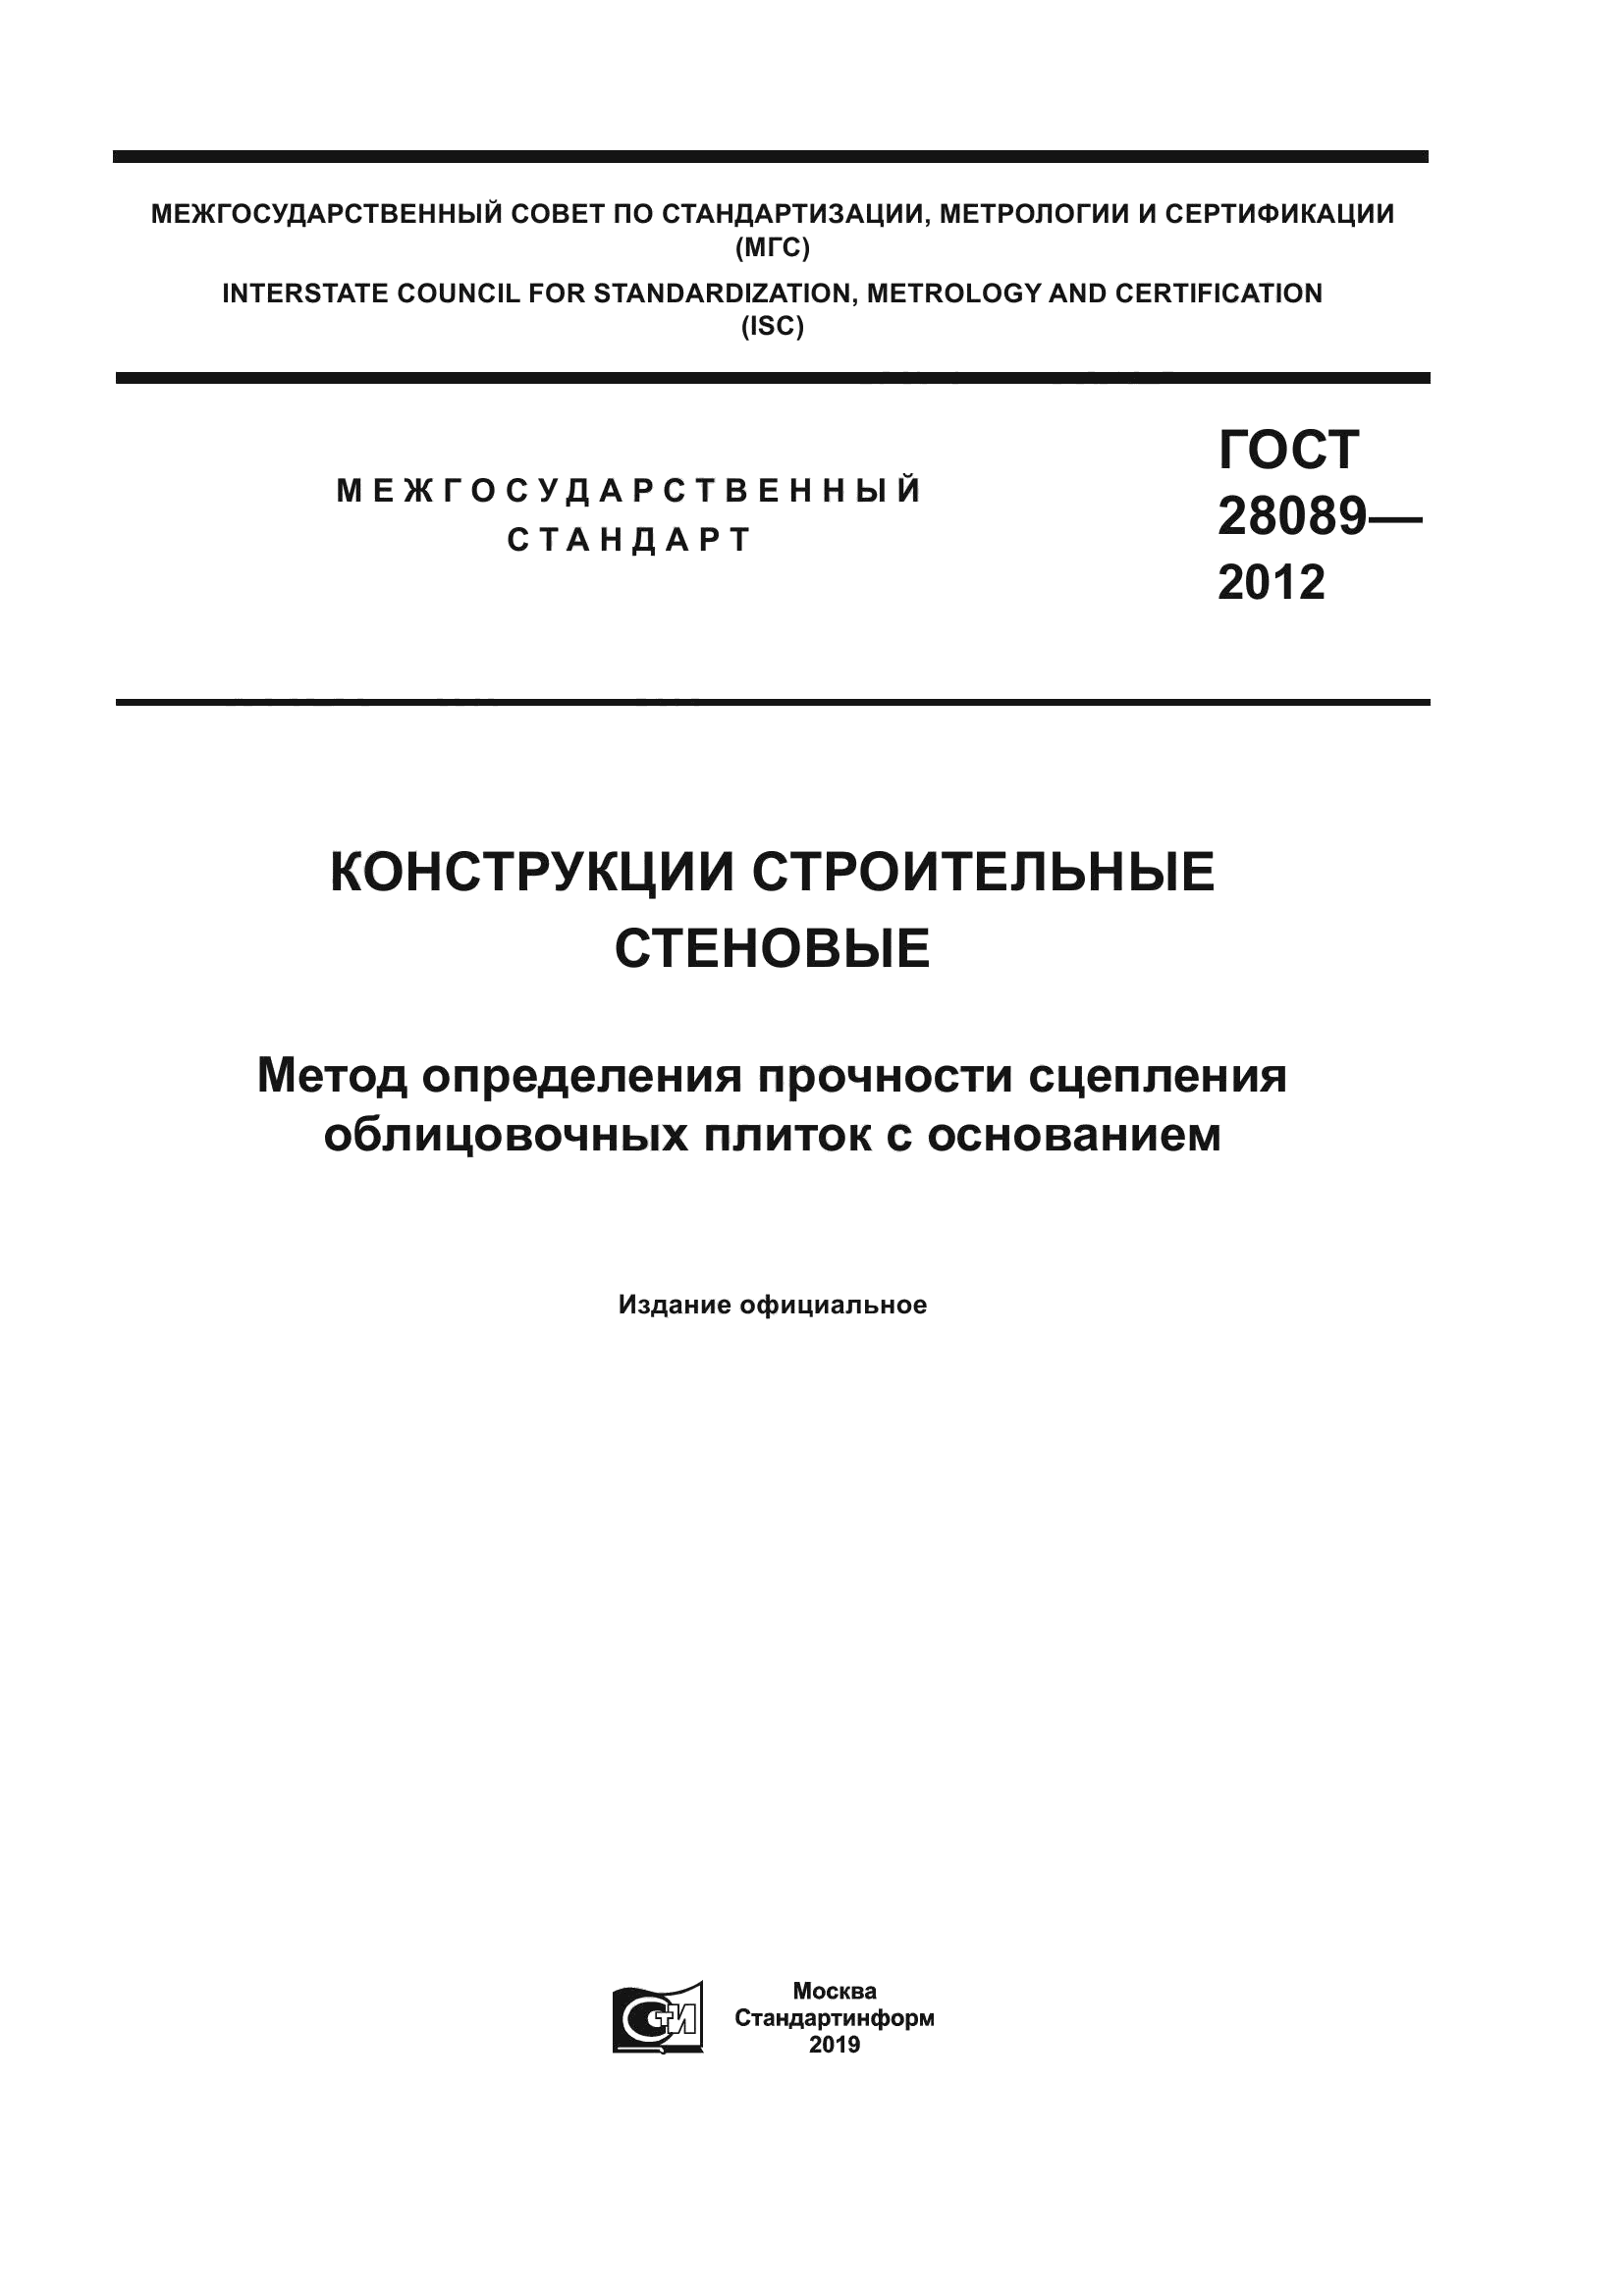 ГОСТ 28089-2012